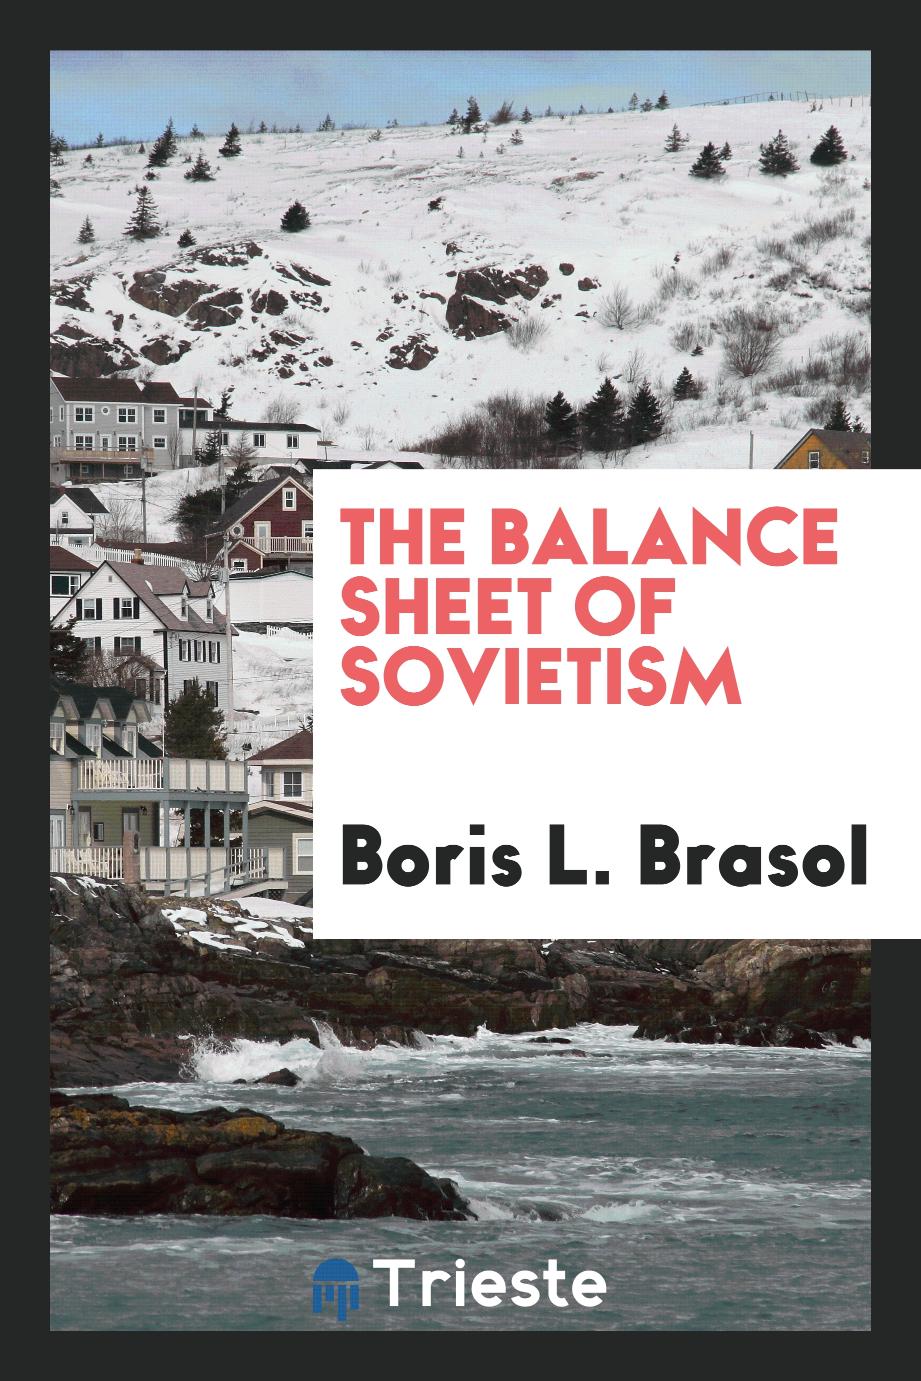 The balance sheet of sovietism